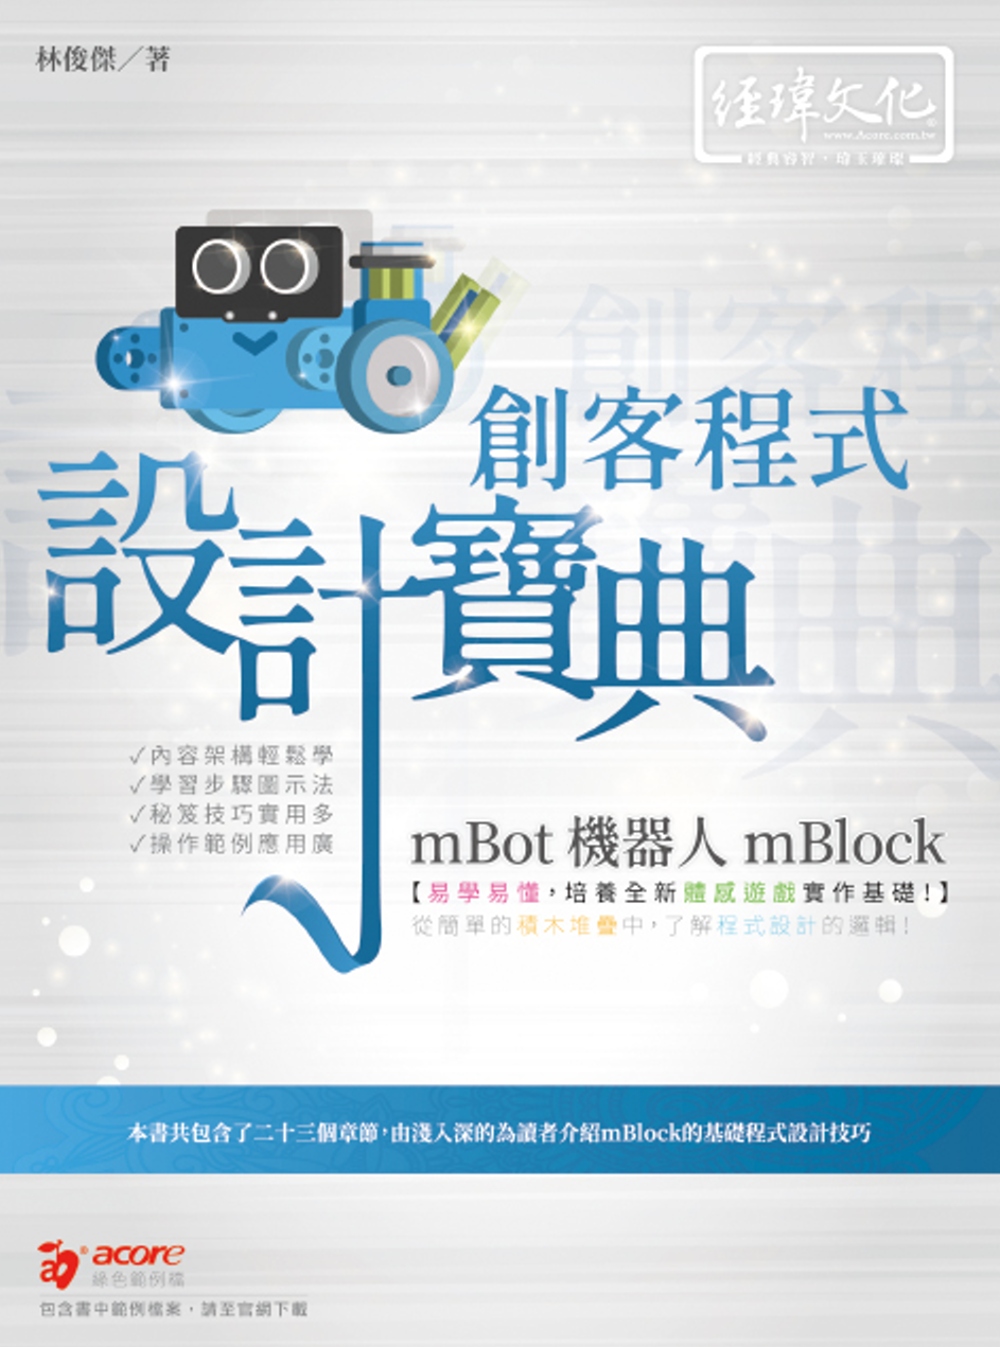 mBot 機器人 mBlock 創客程式設計寶典